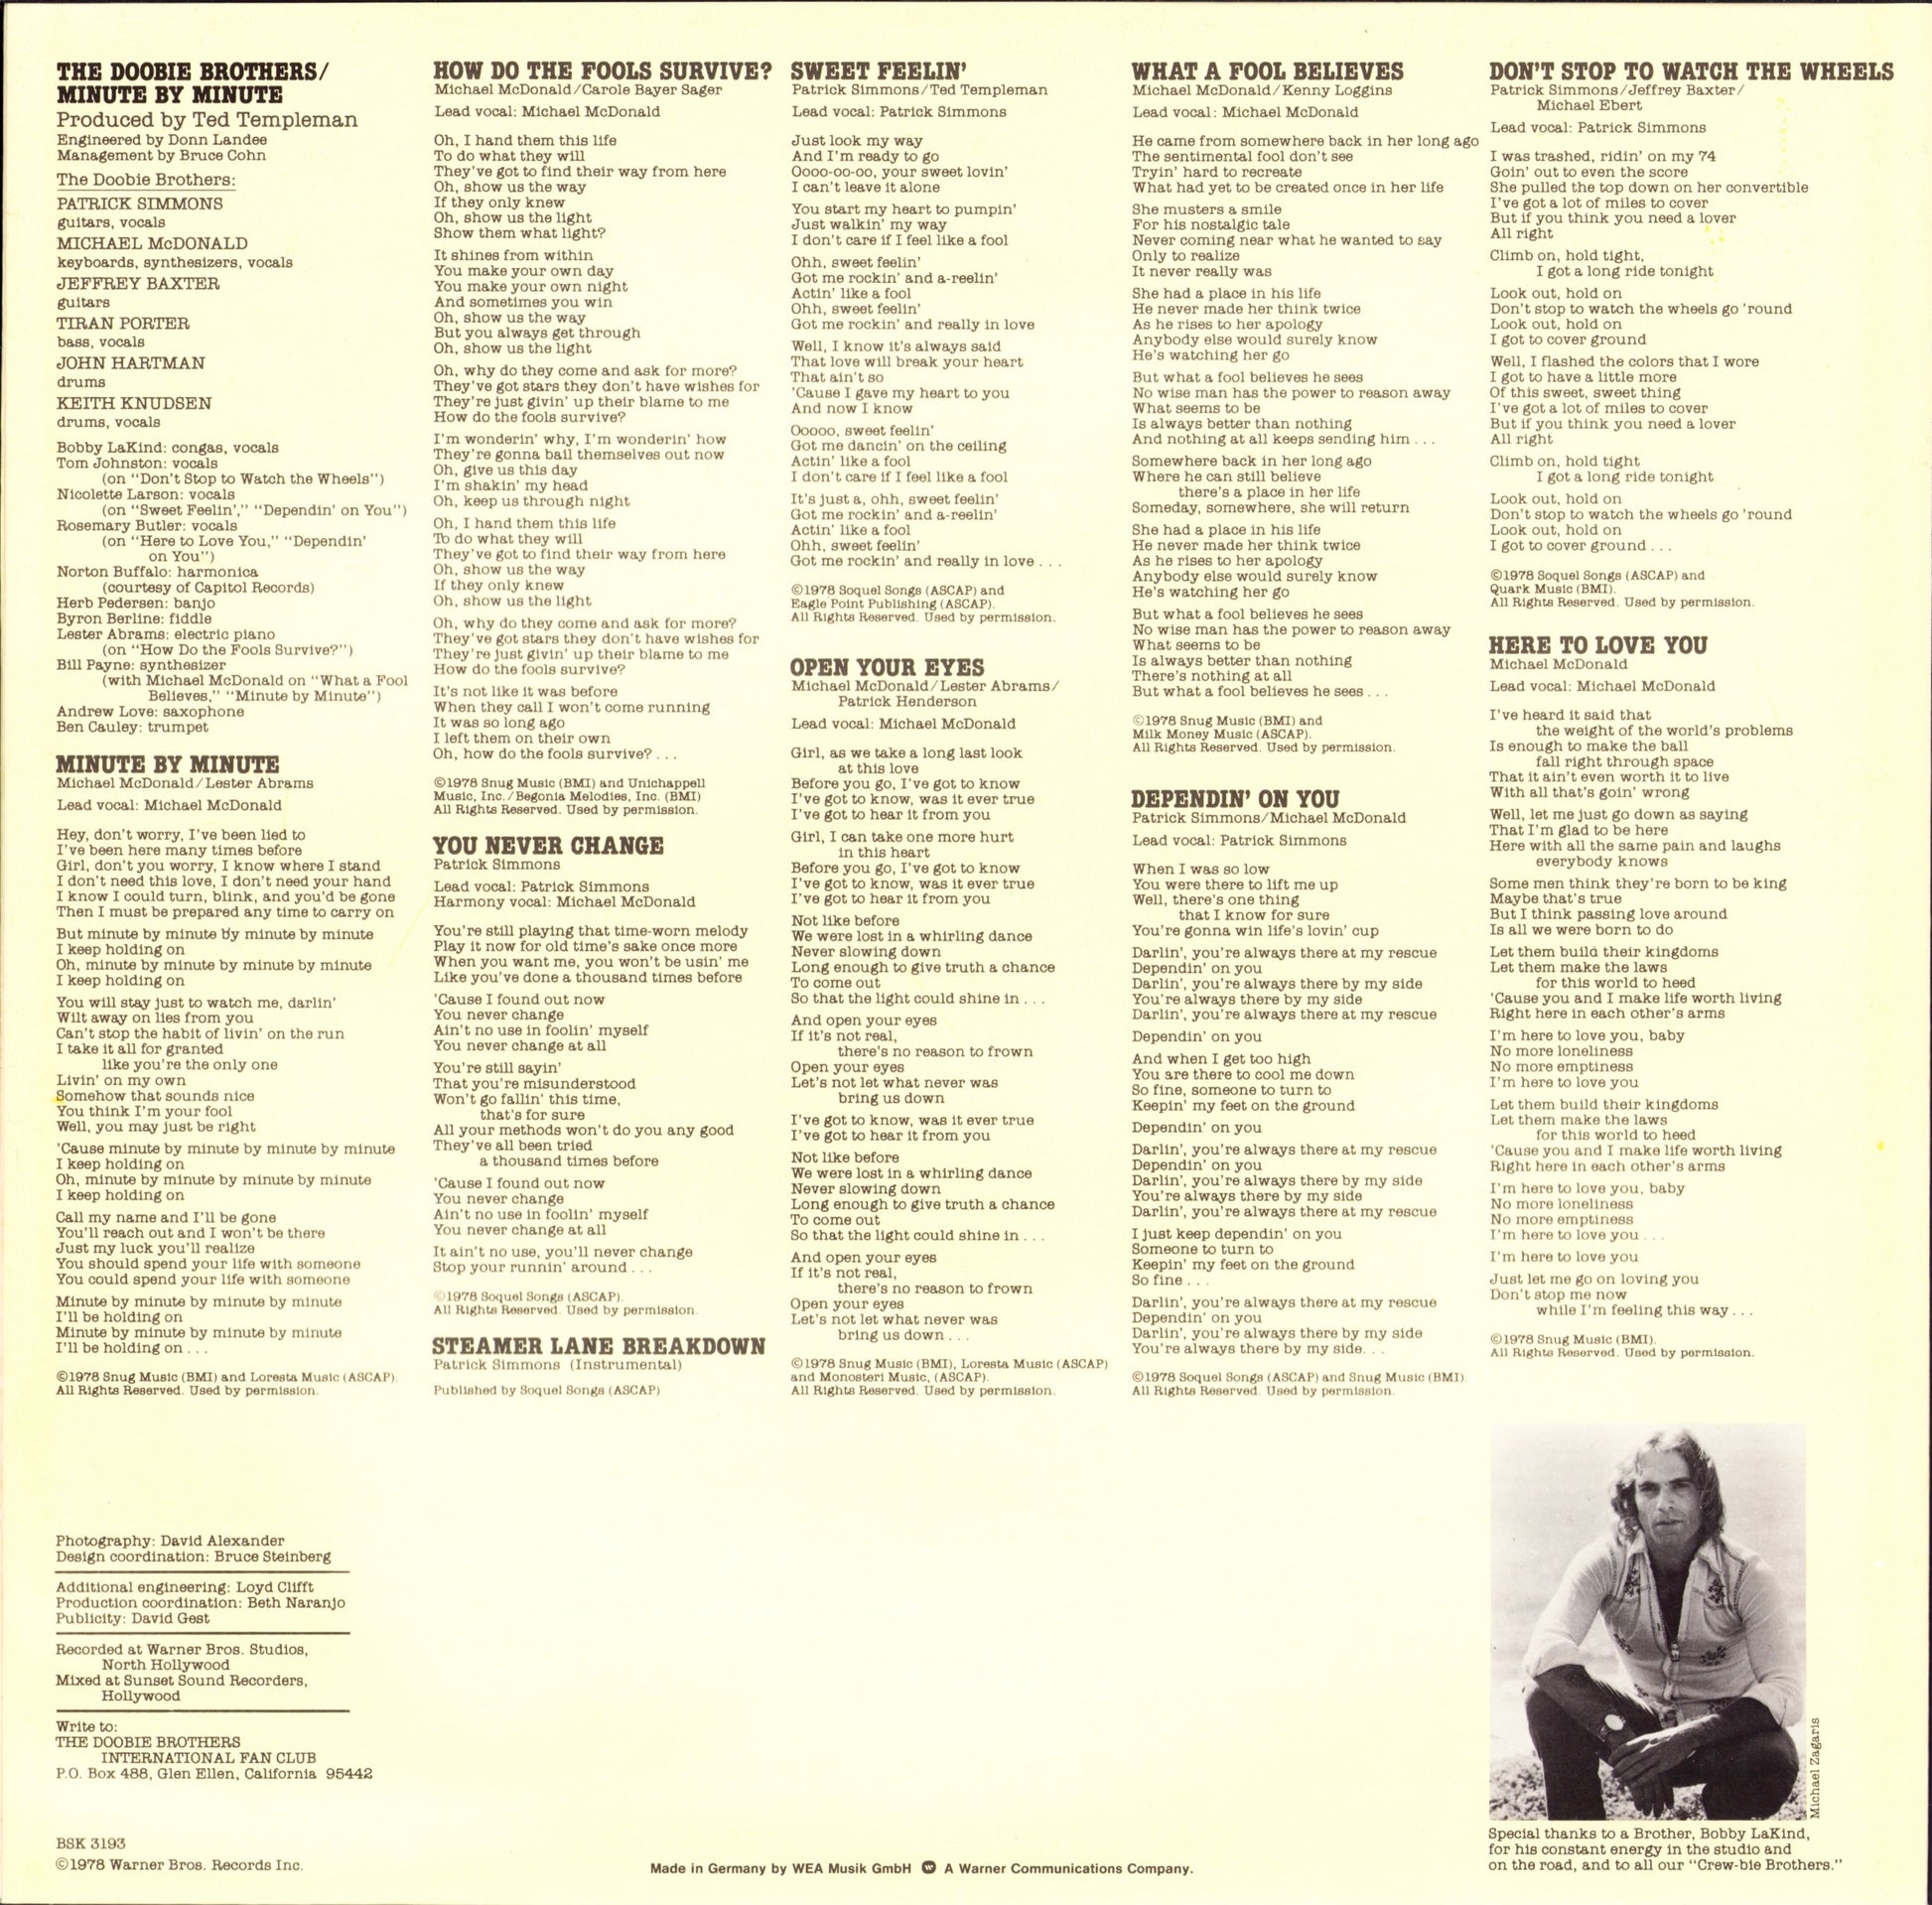 The Doobie Brothers ‎- Minute By Minute Vinyl LP